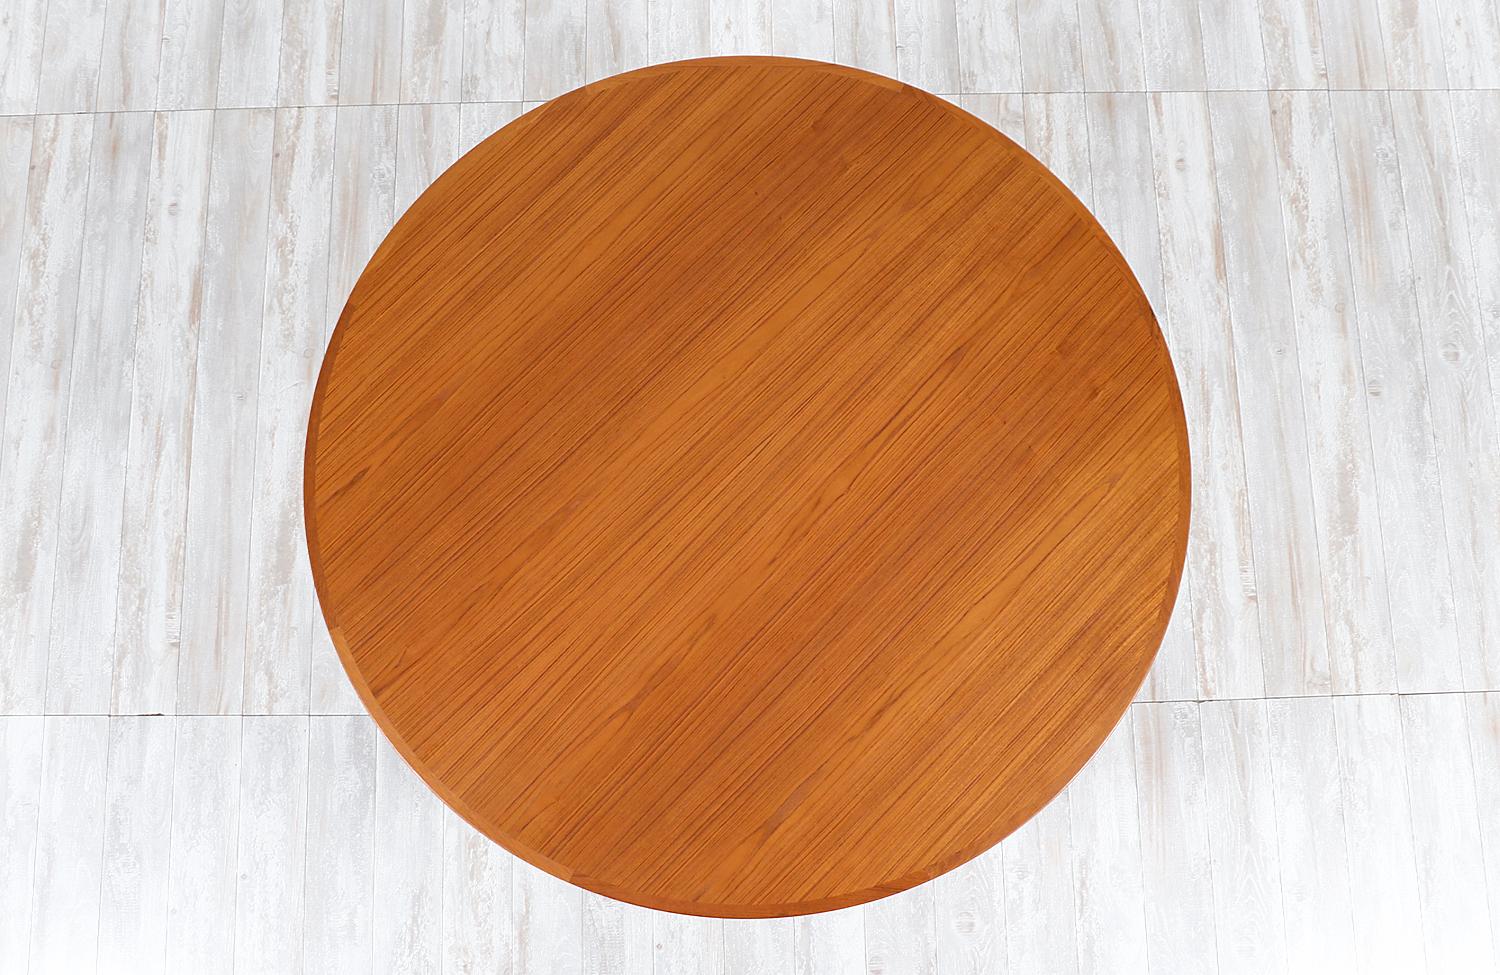 Danish Modern “Flip-Flap” Expanding Teak Dining Table by Dyrlund 1